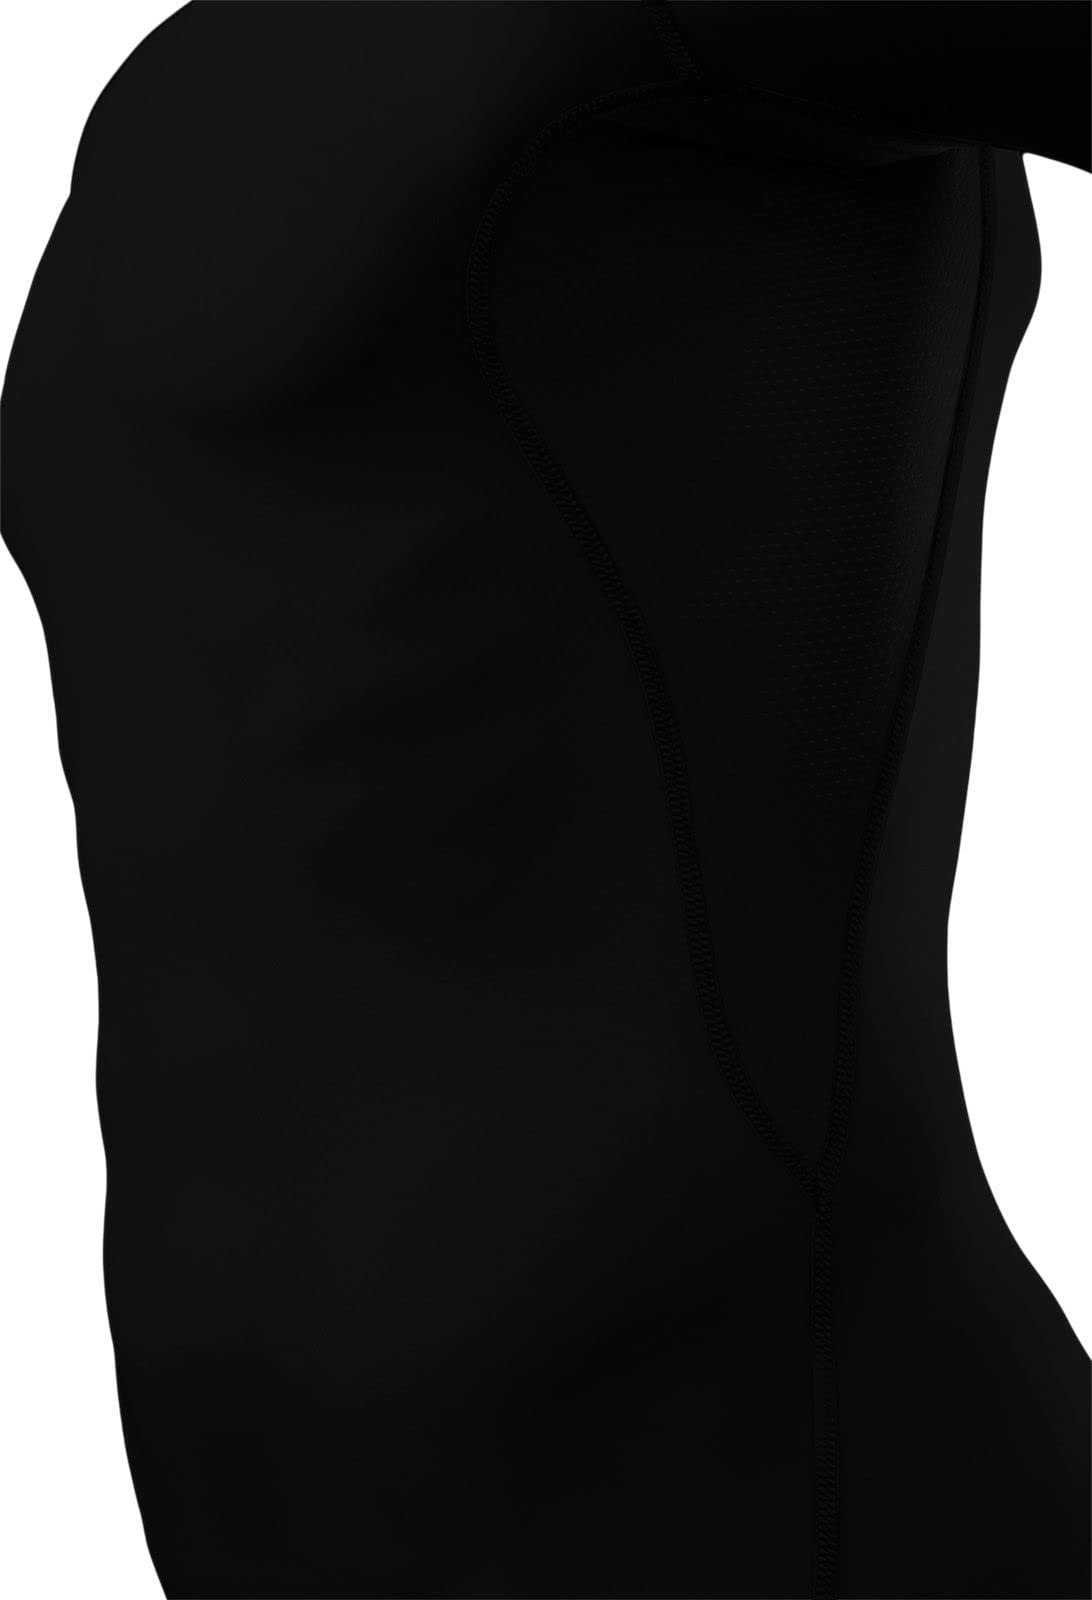 TCA Schwarz Sportshirt, Herren kurzärmlig, - elastisch HyperFusion TCA Funktionsunterhemd